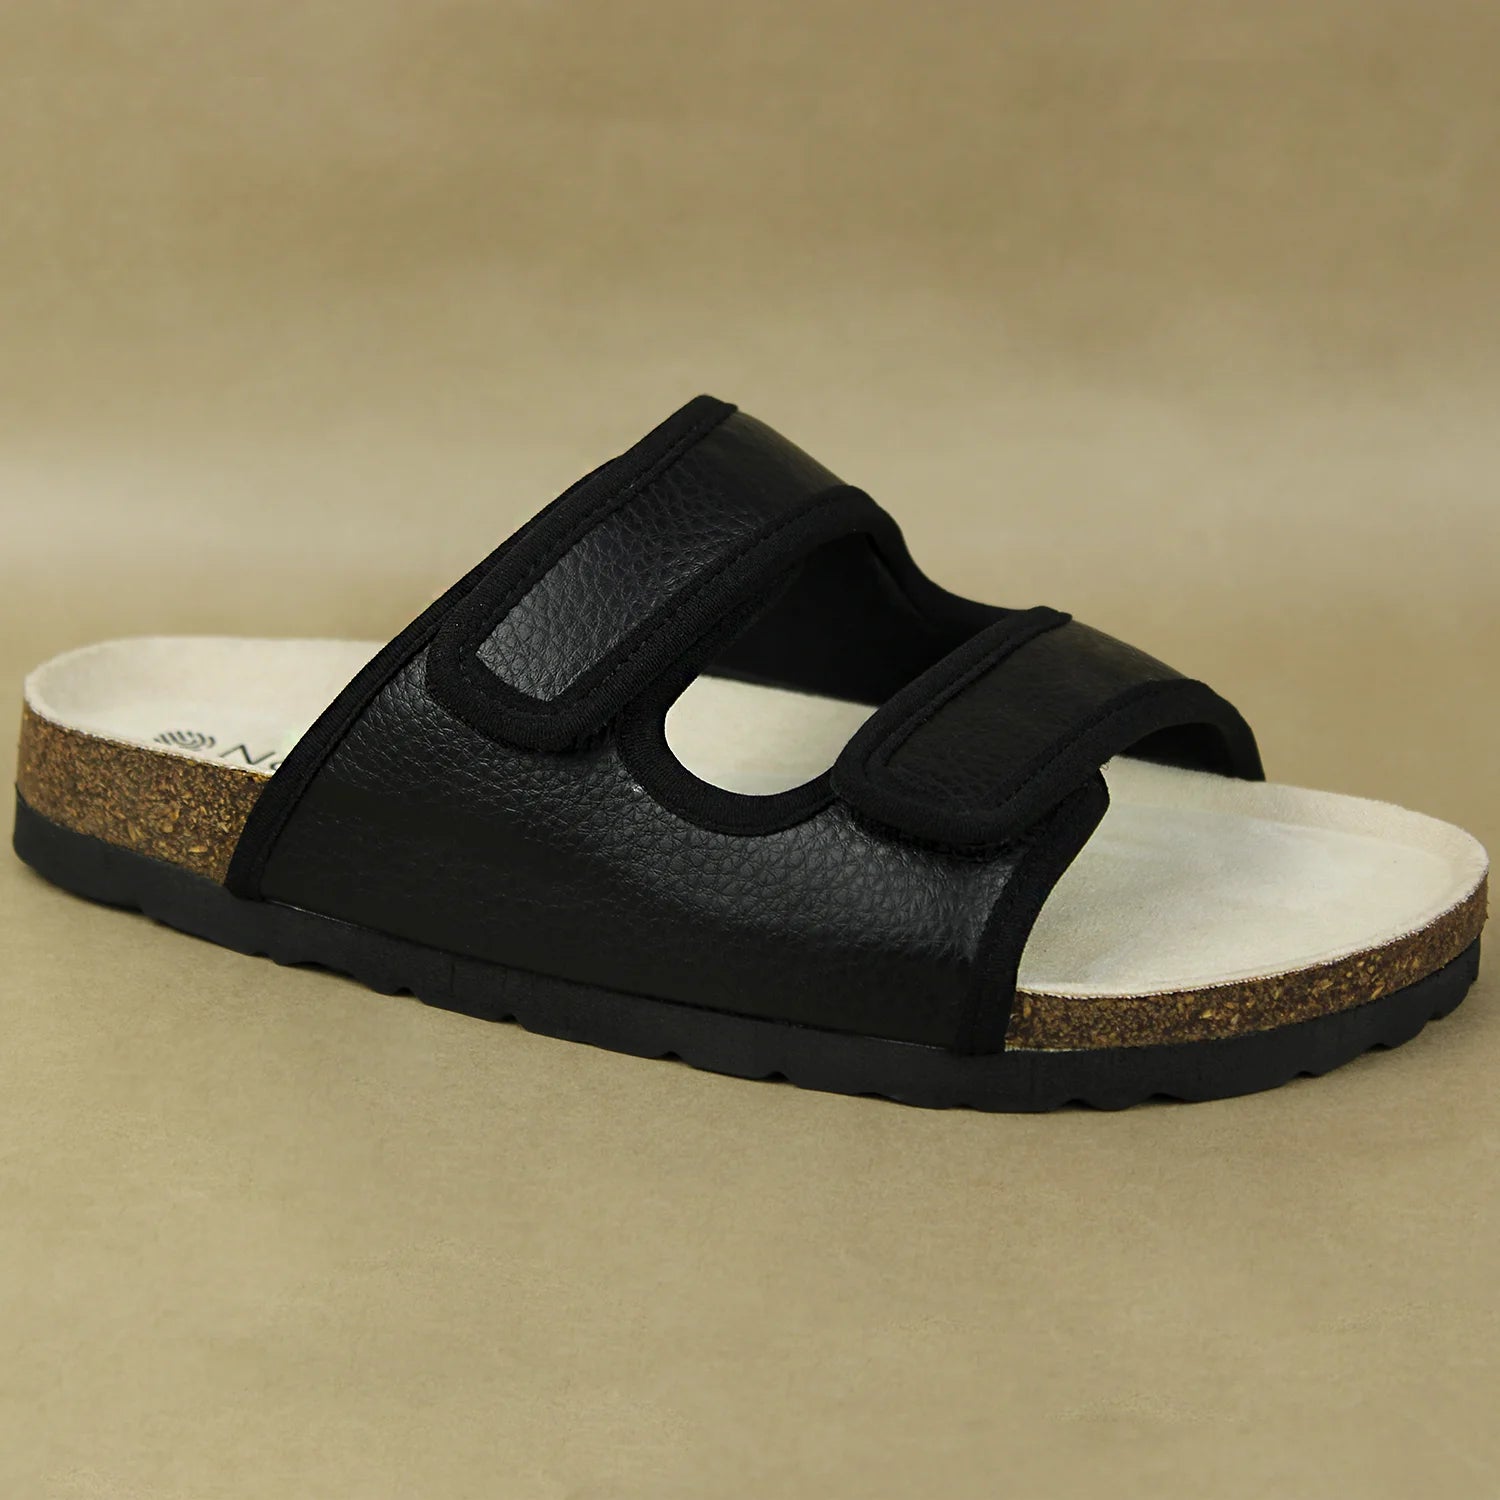 Lightweight black cork sandals with upper vegan leather